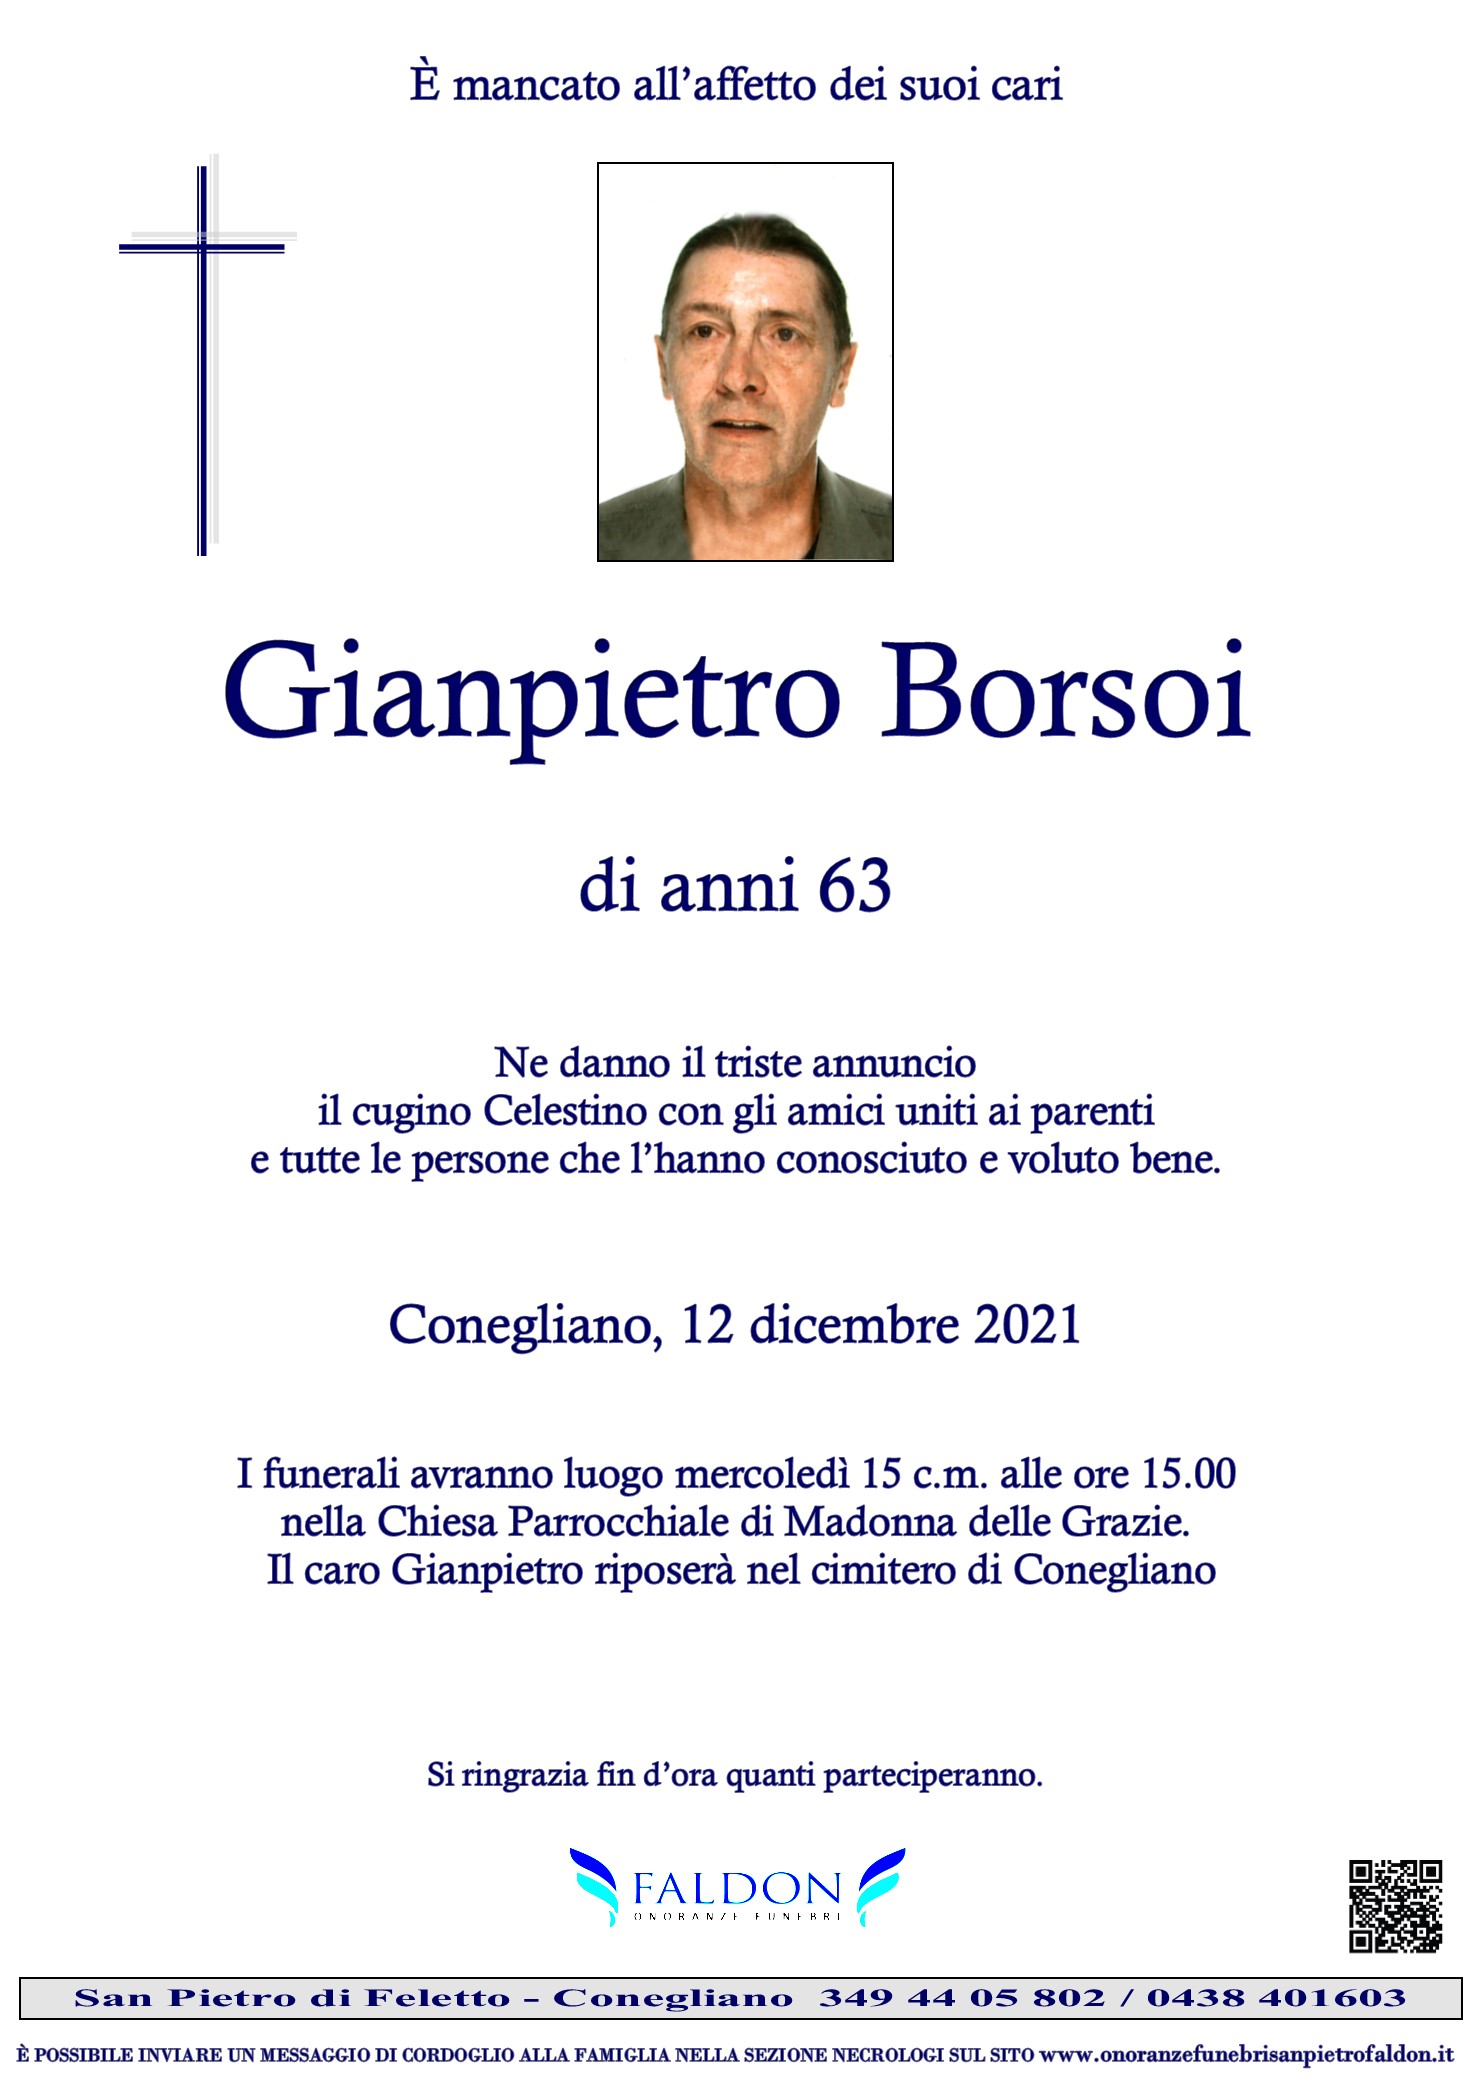 Gianpietro Borsoi